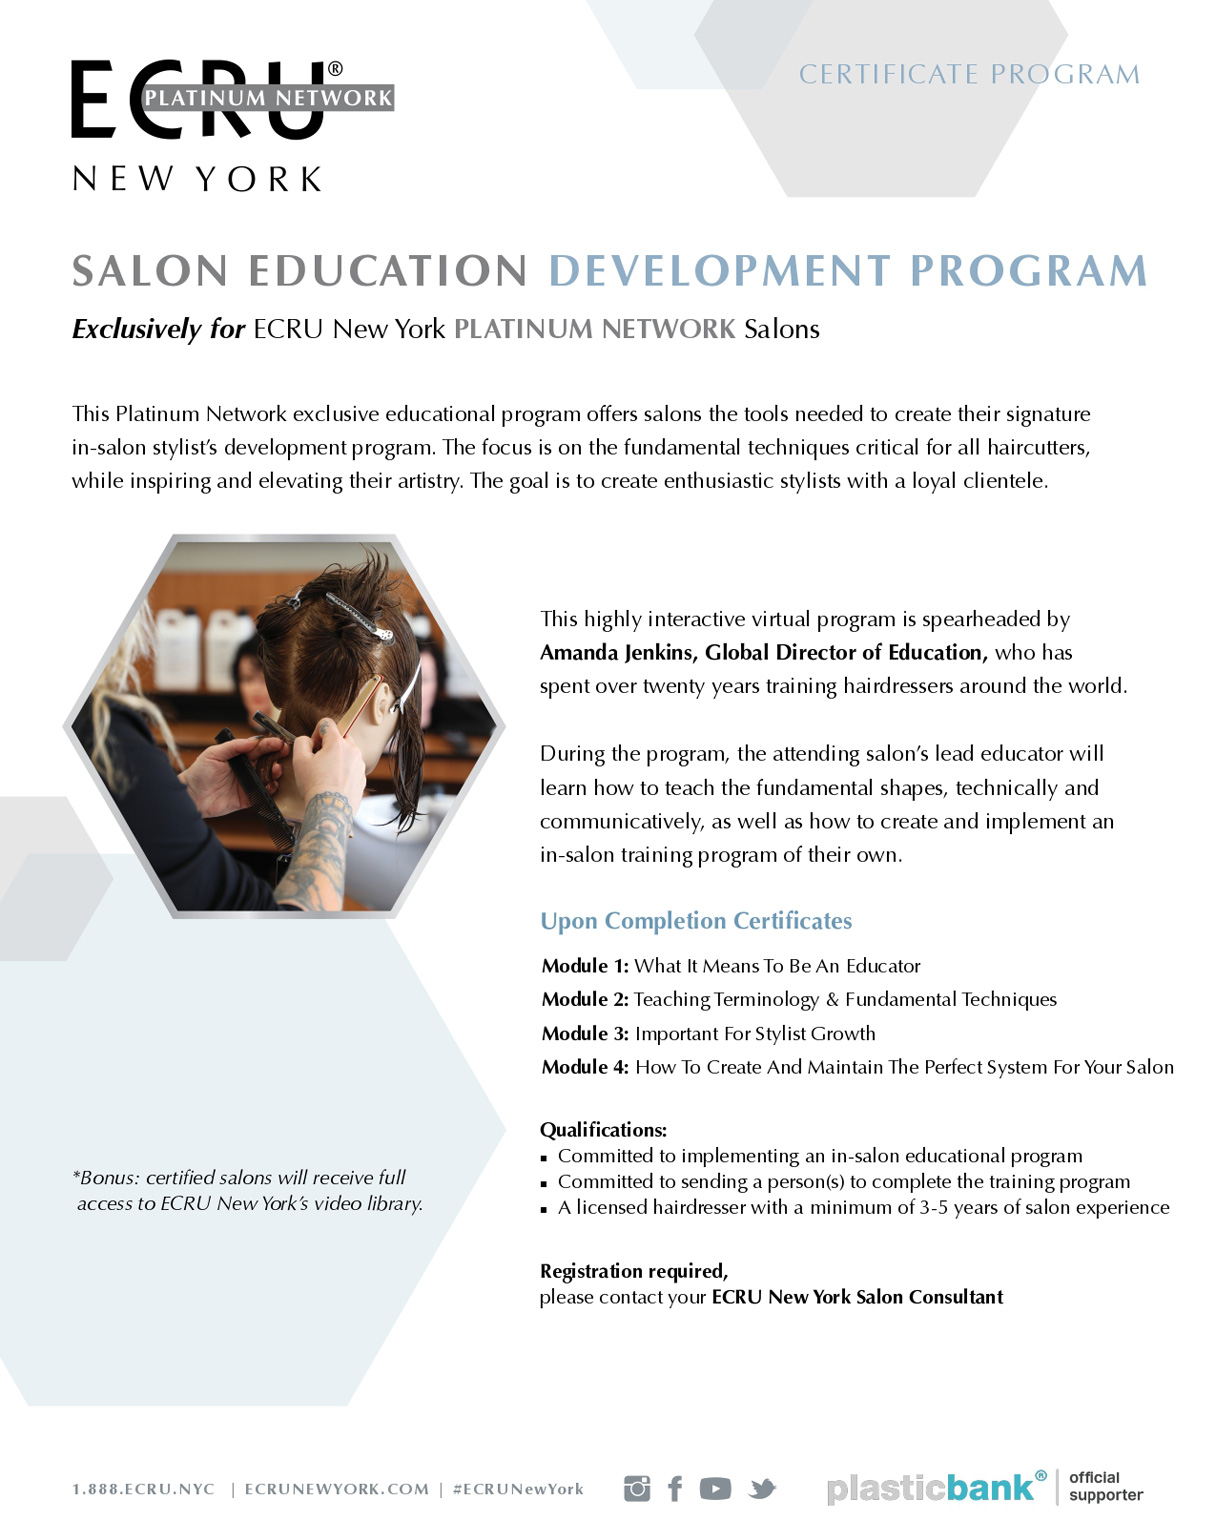 Certificate of Salon Education Development Program